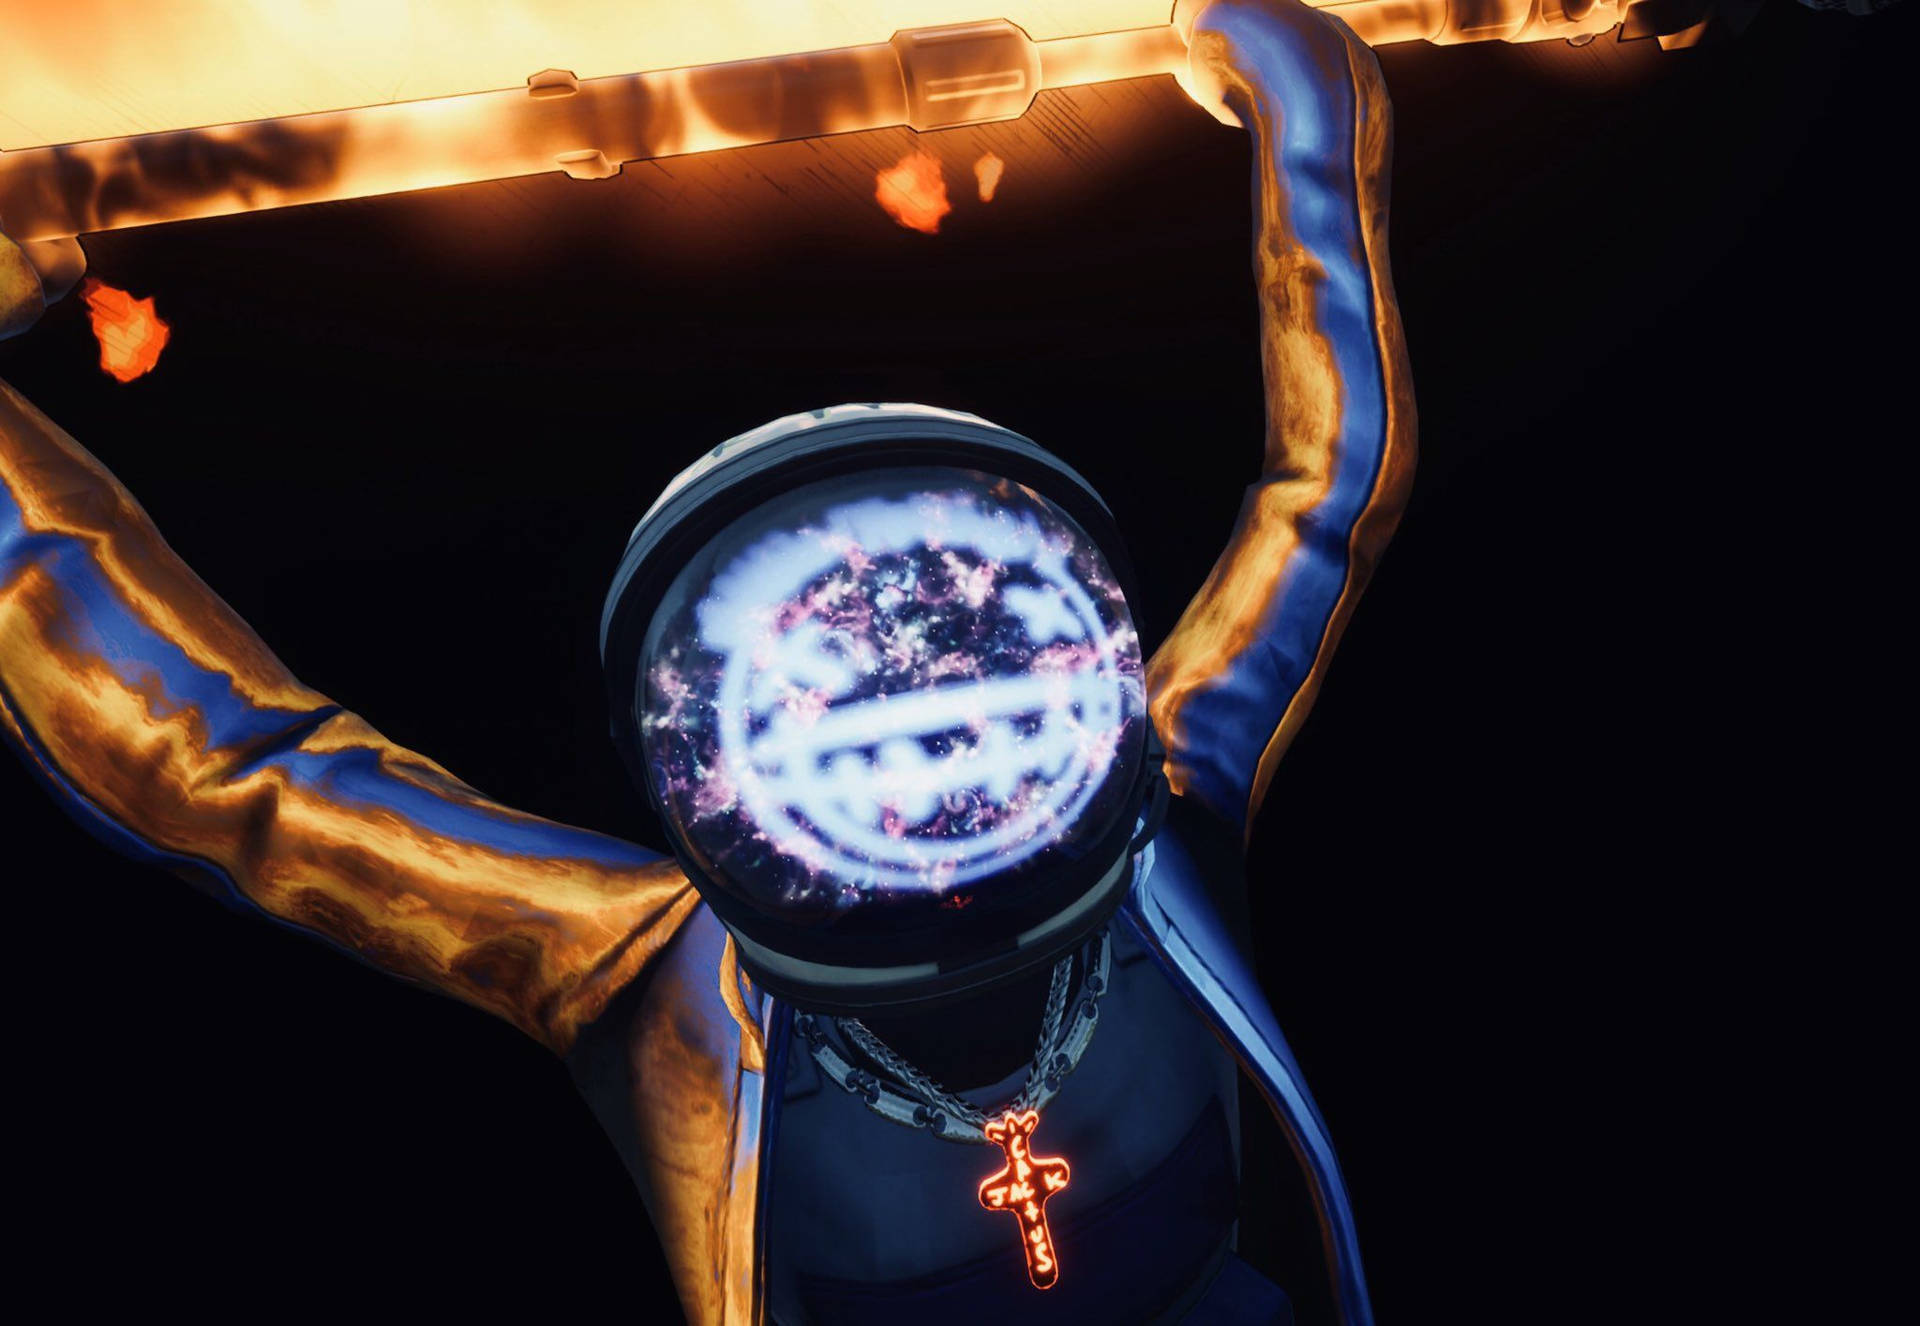 Travis Scott Fortnite With Burning Pipe Background